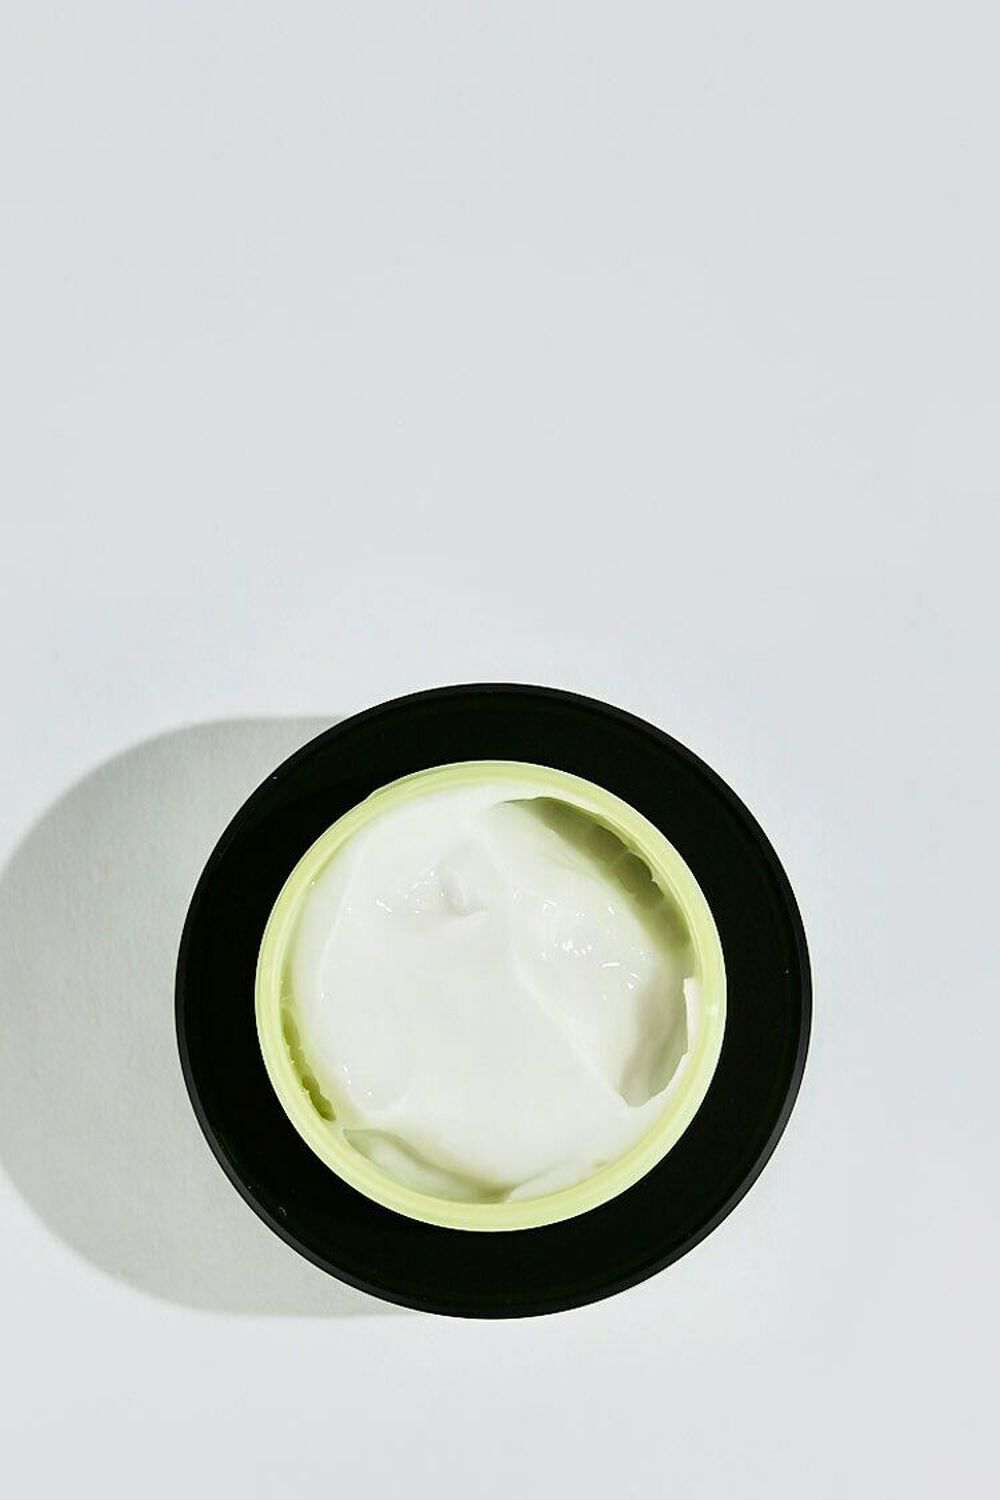 TONYMOLY Chok Chok Green Tea Watery Cream, image 2